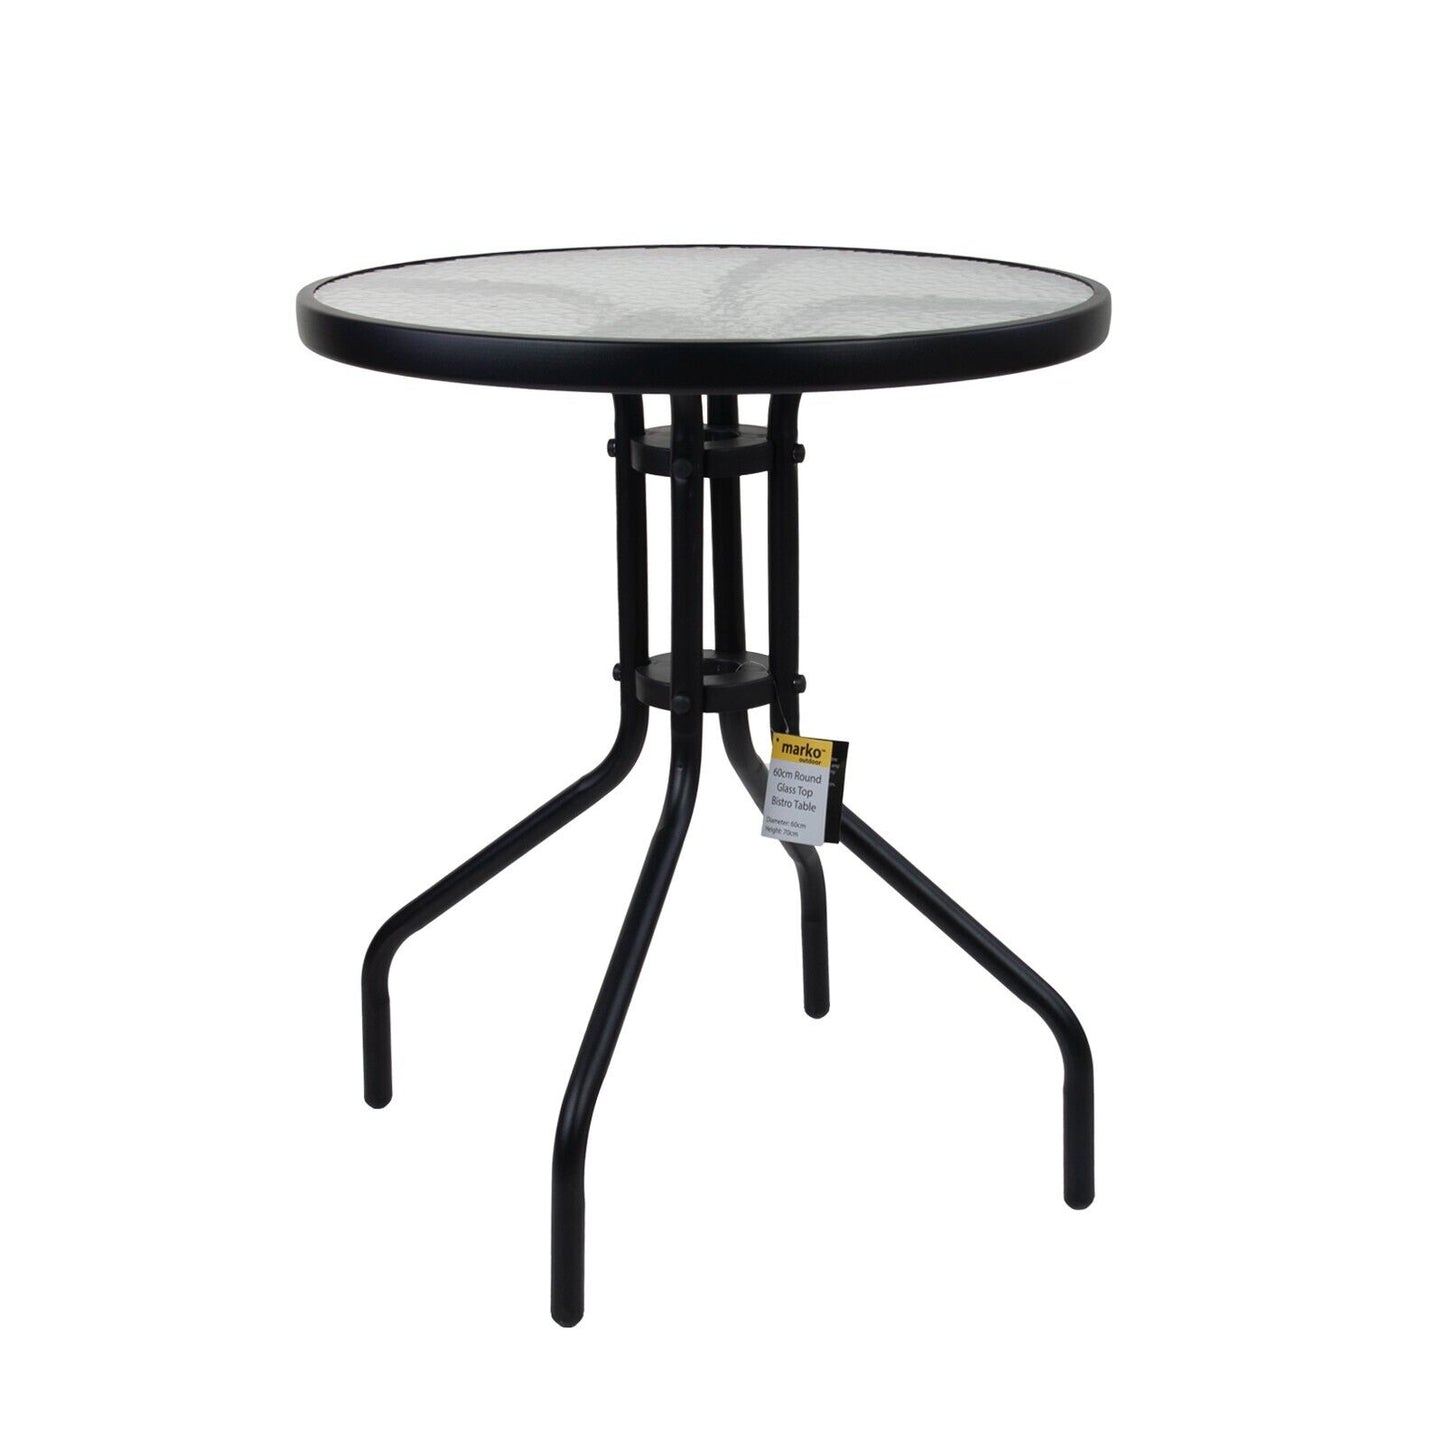 60cm Round Glass Bistro Table